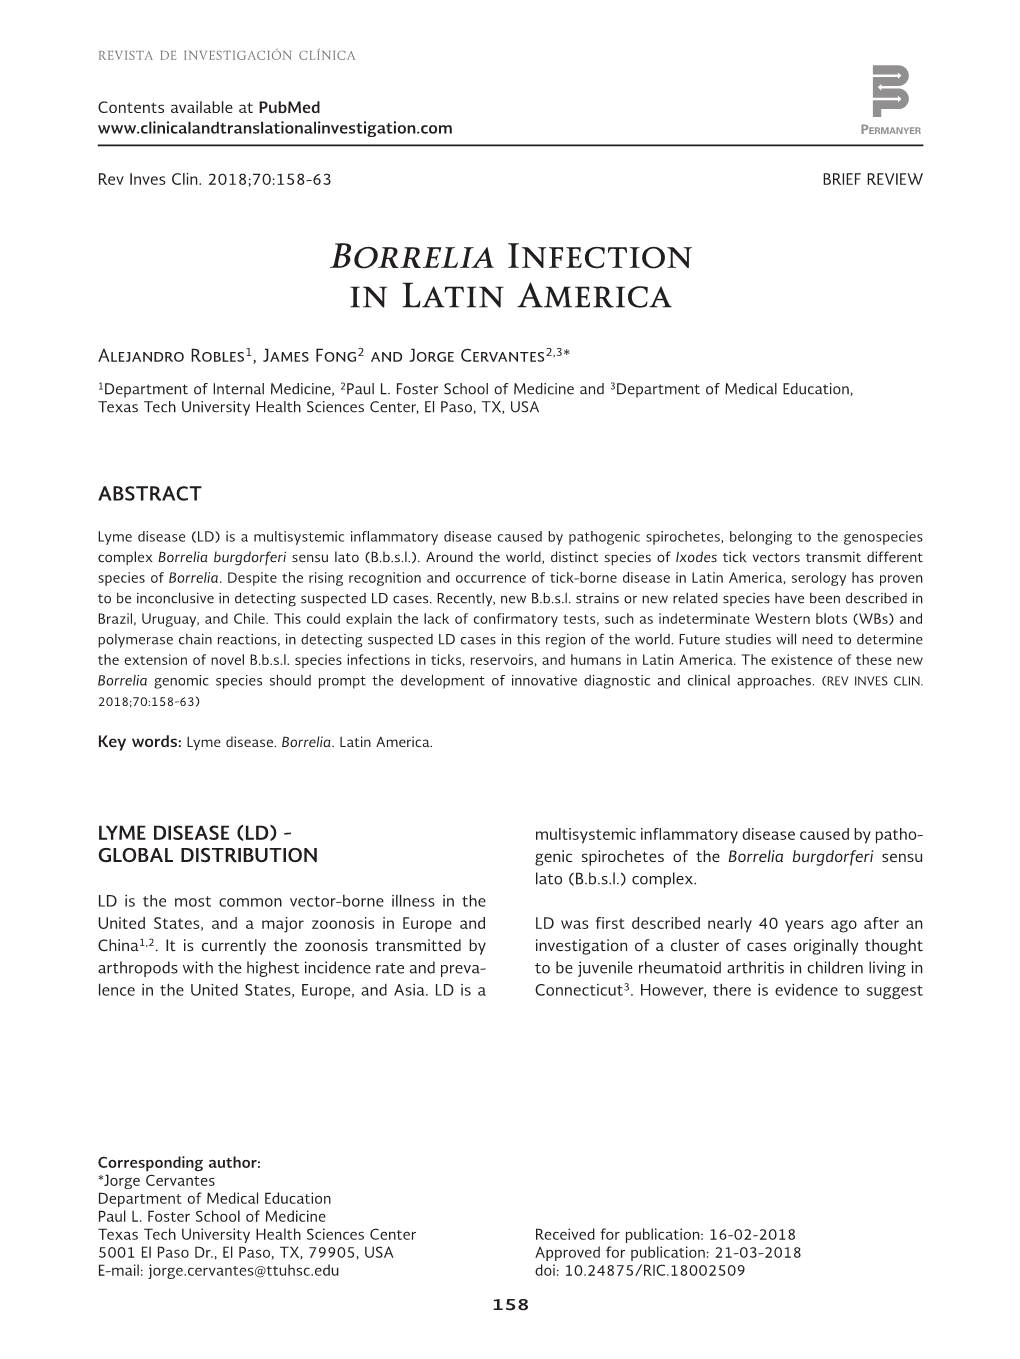 Borrelia Infection in Latin America